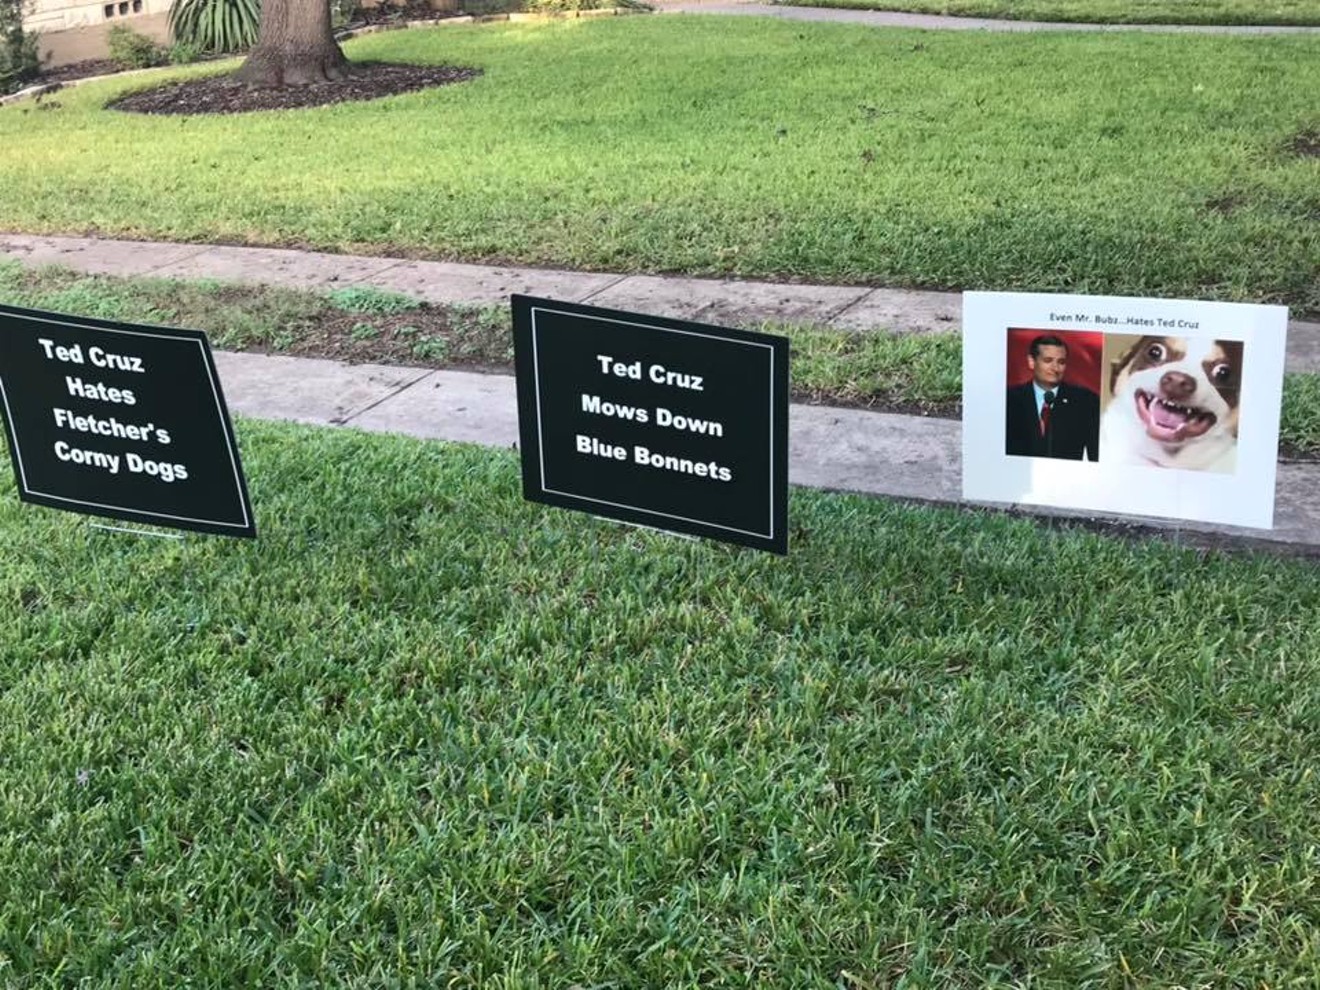 "Ted Cruz hates Fletcher's Corny Dogs" — Oak Cliff resident John Bradley spotted a few interesting yard signs in his Kessler Plaza neighborhood.